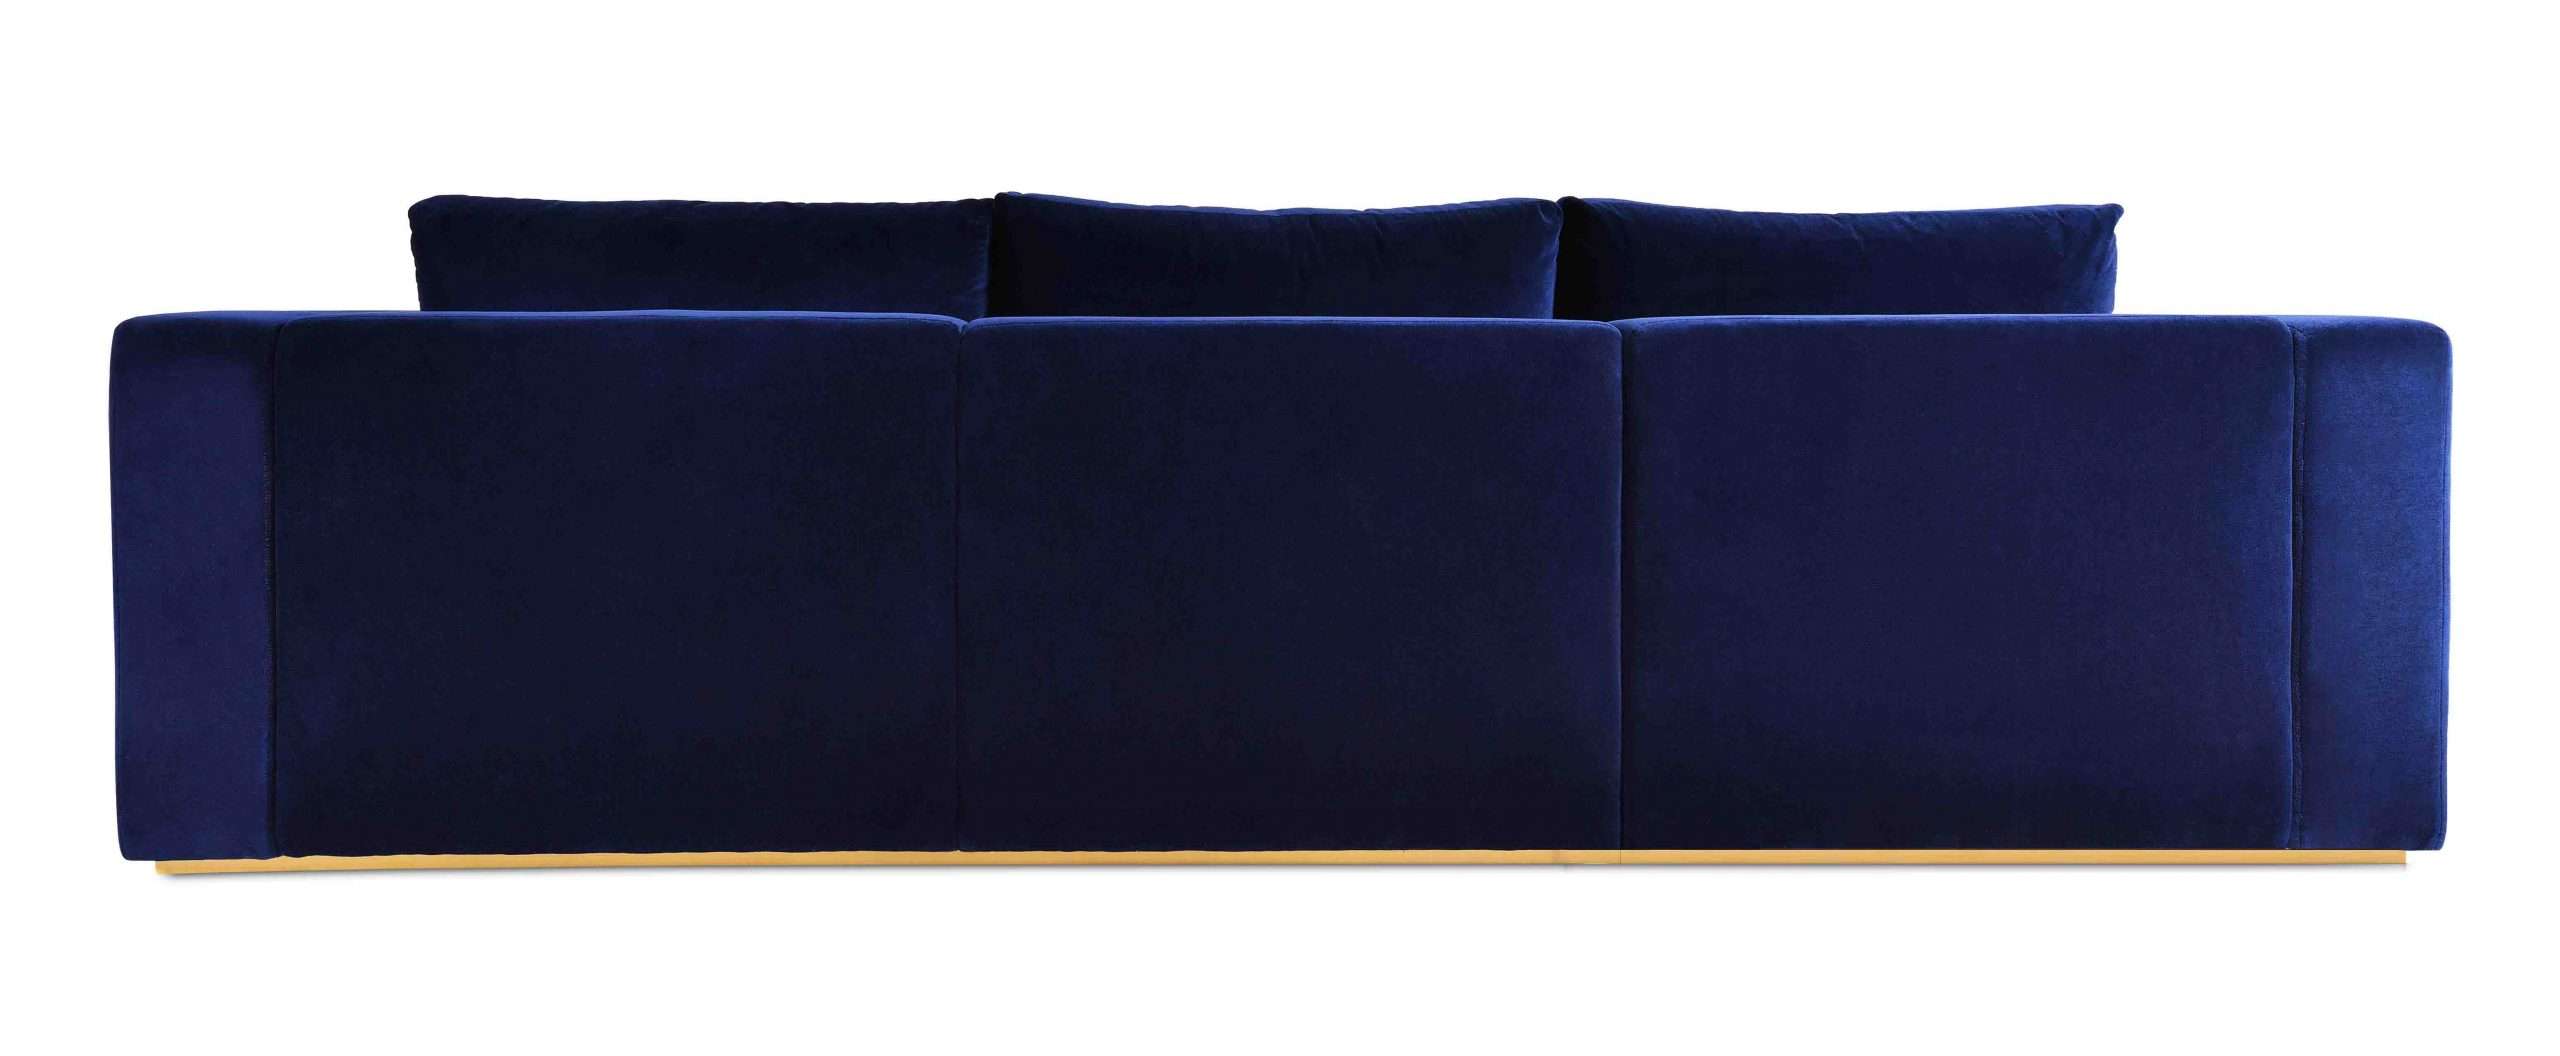 RANUCI Sectional Sofa